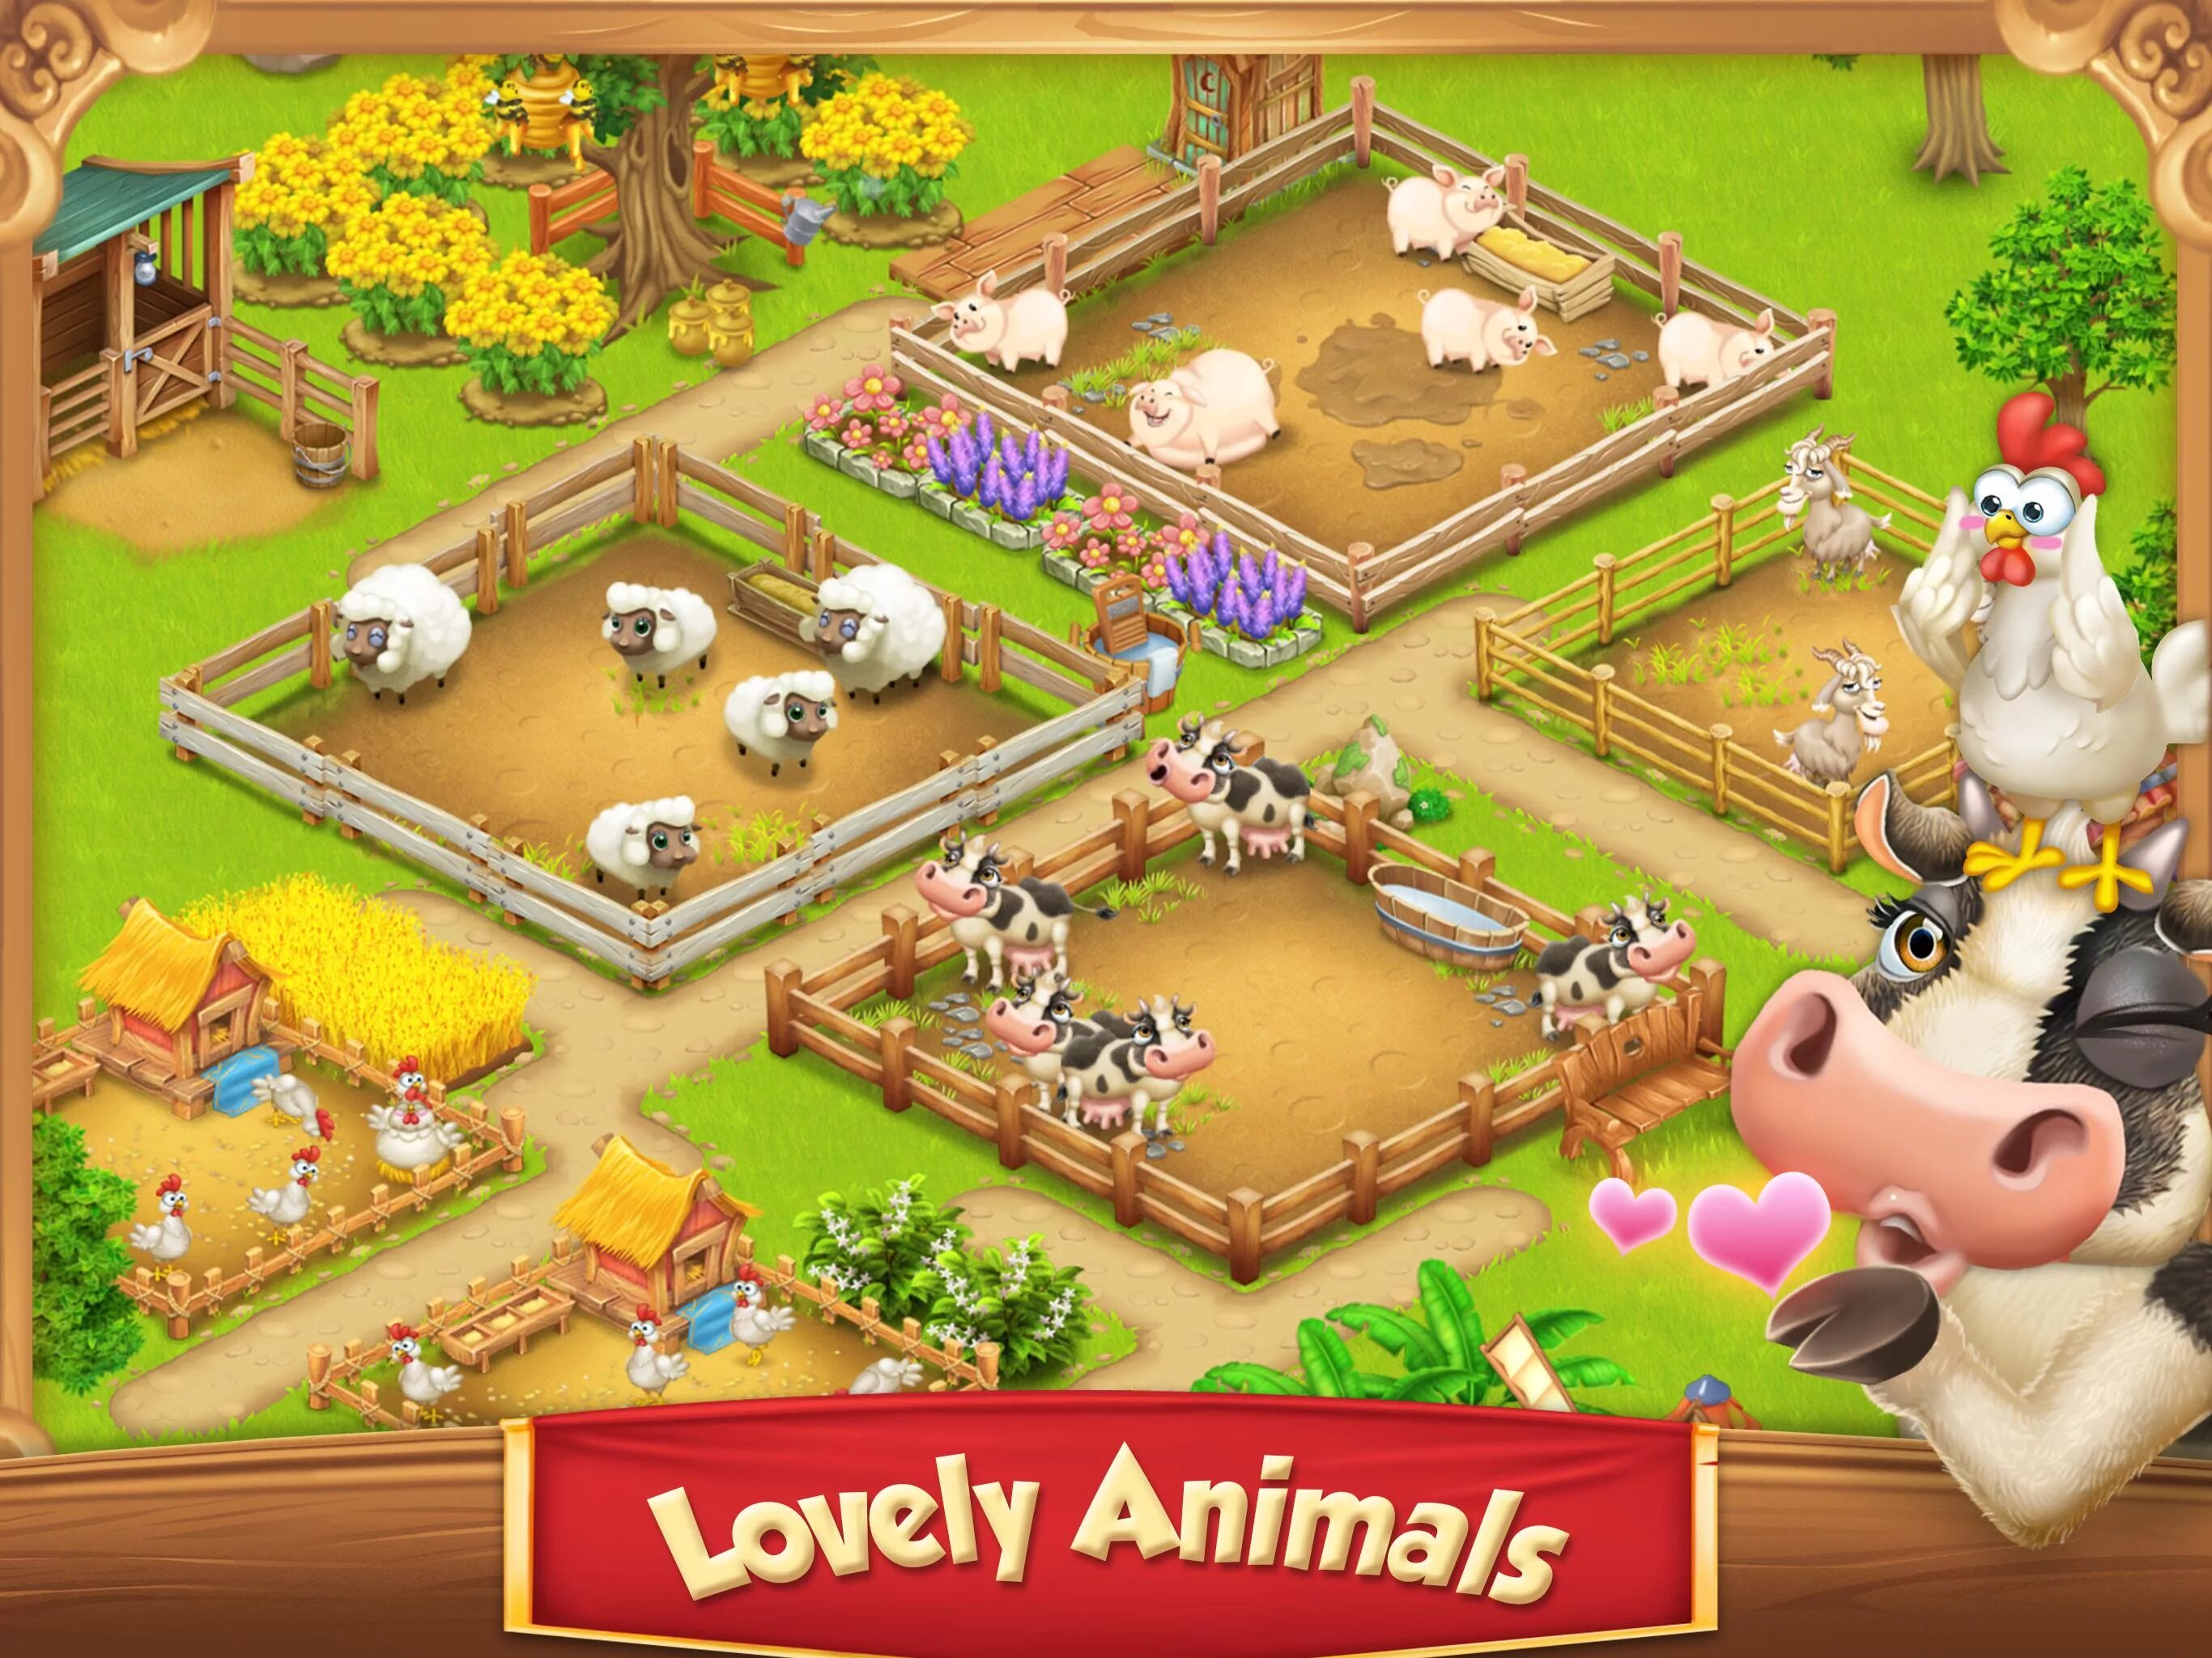 Игра ферма. Игра Farm Village. Family Farm игра. Ферма на андроид. Игра деревенская ферма.